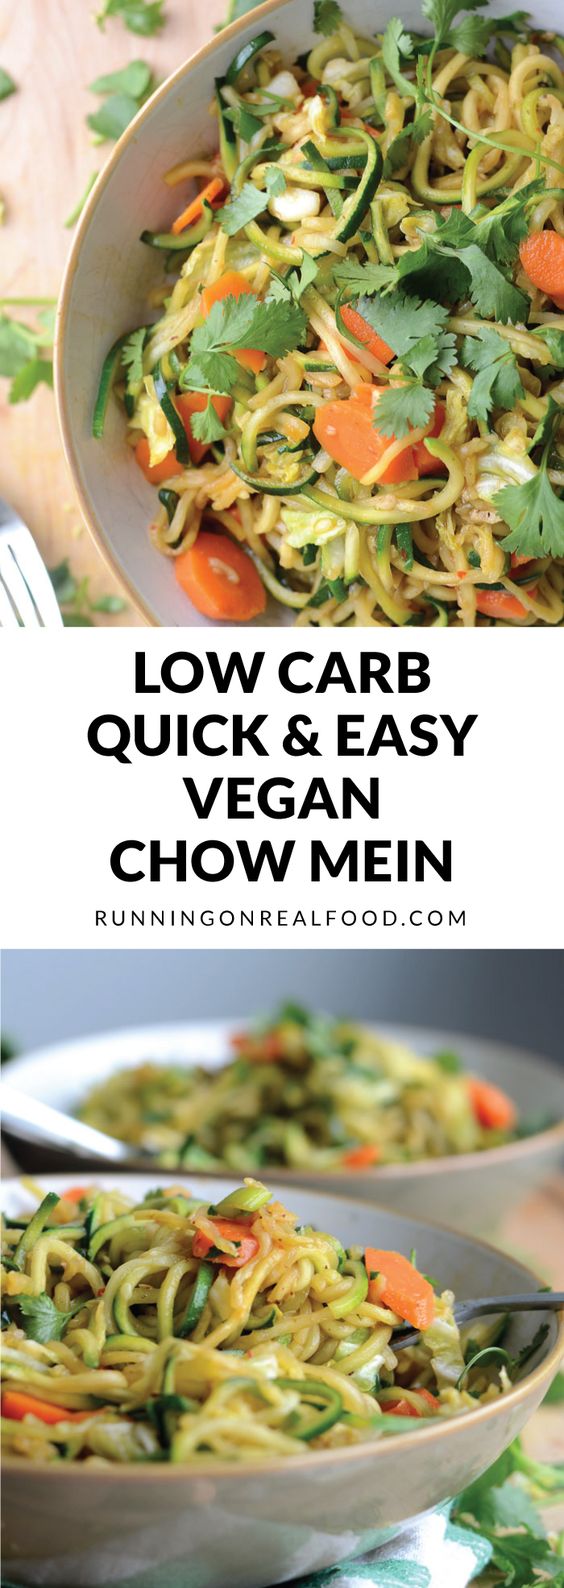 low carb vegan chow mein